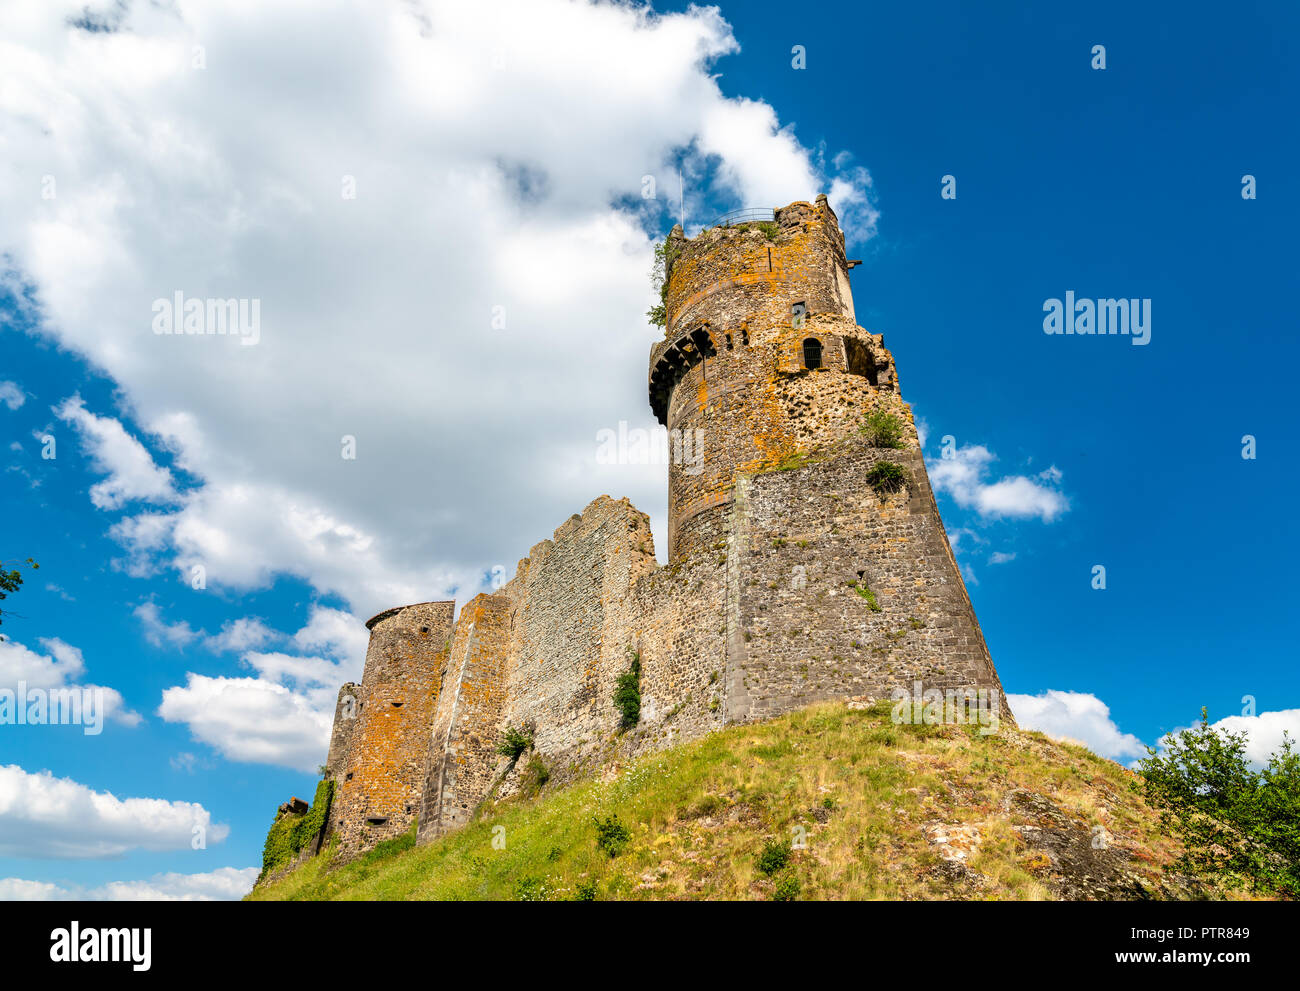 The Chateau de Tournoel, a castle in the Puy-de-Dome department of France Stock Photo